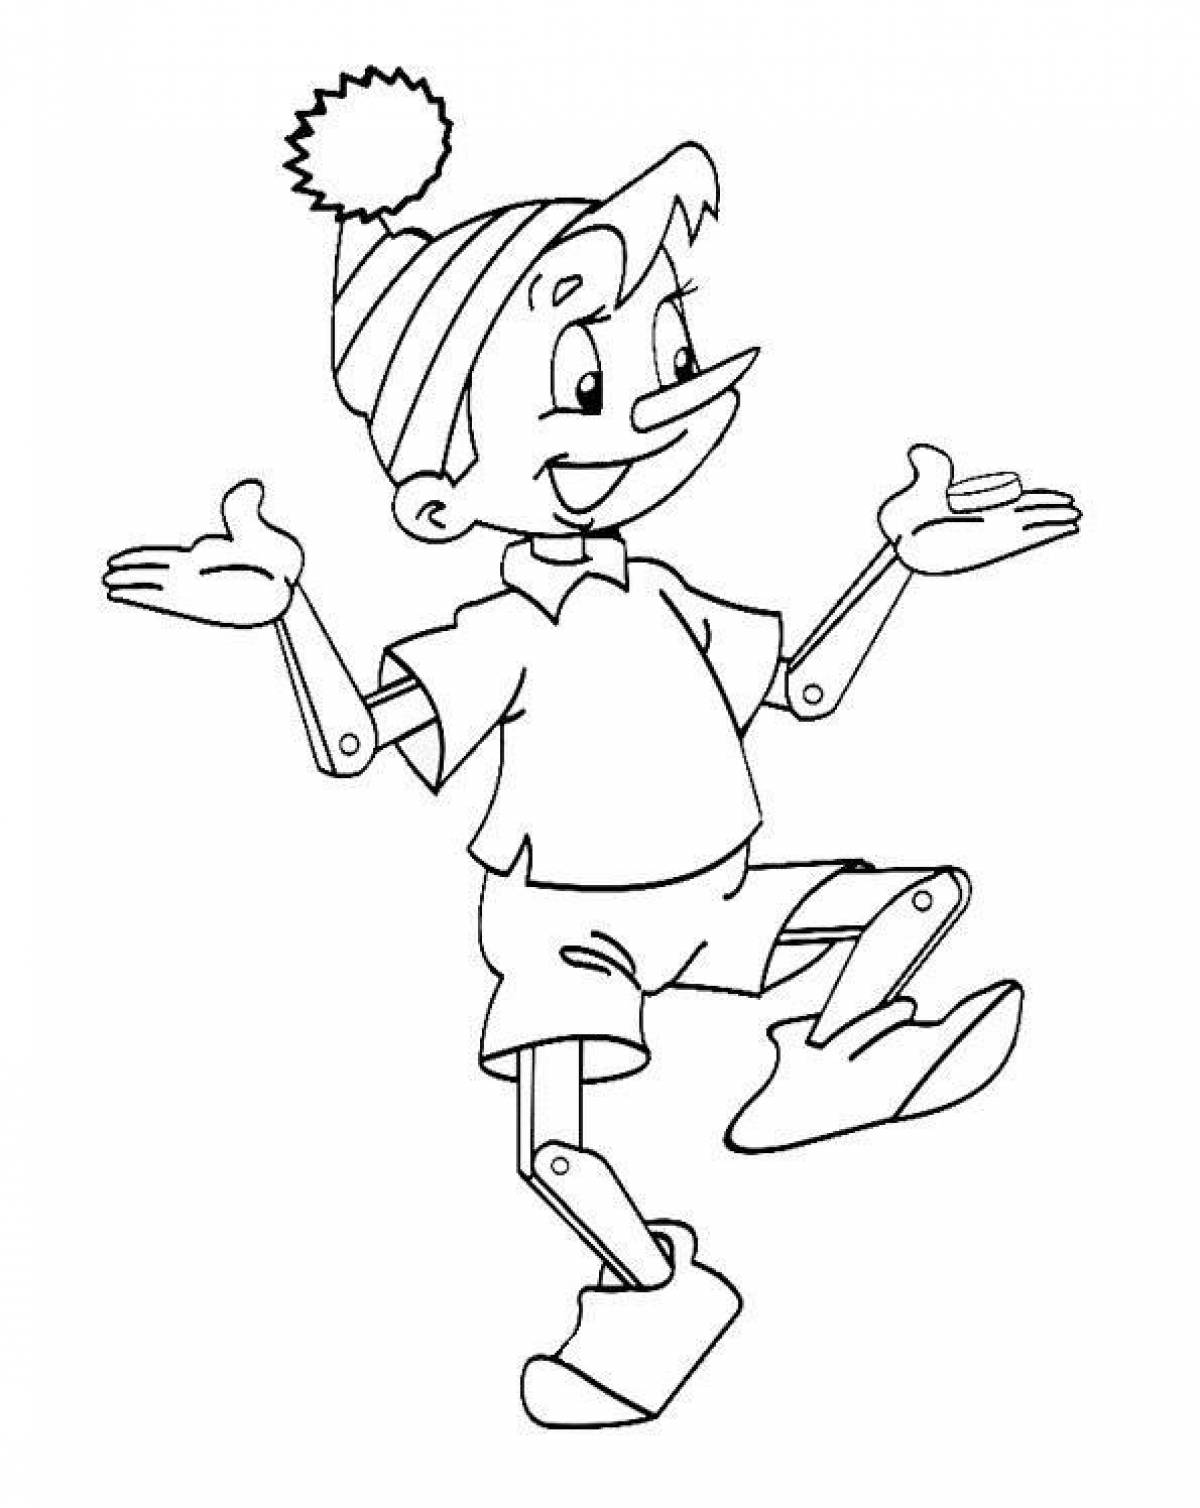 Pinocchio fun coloring for kids